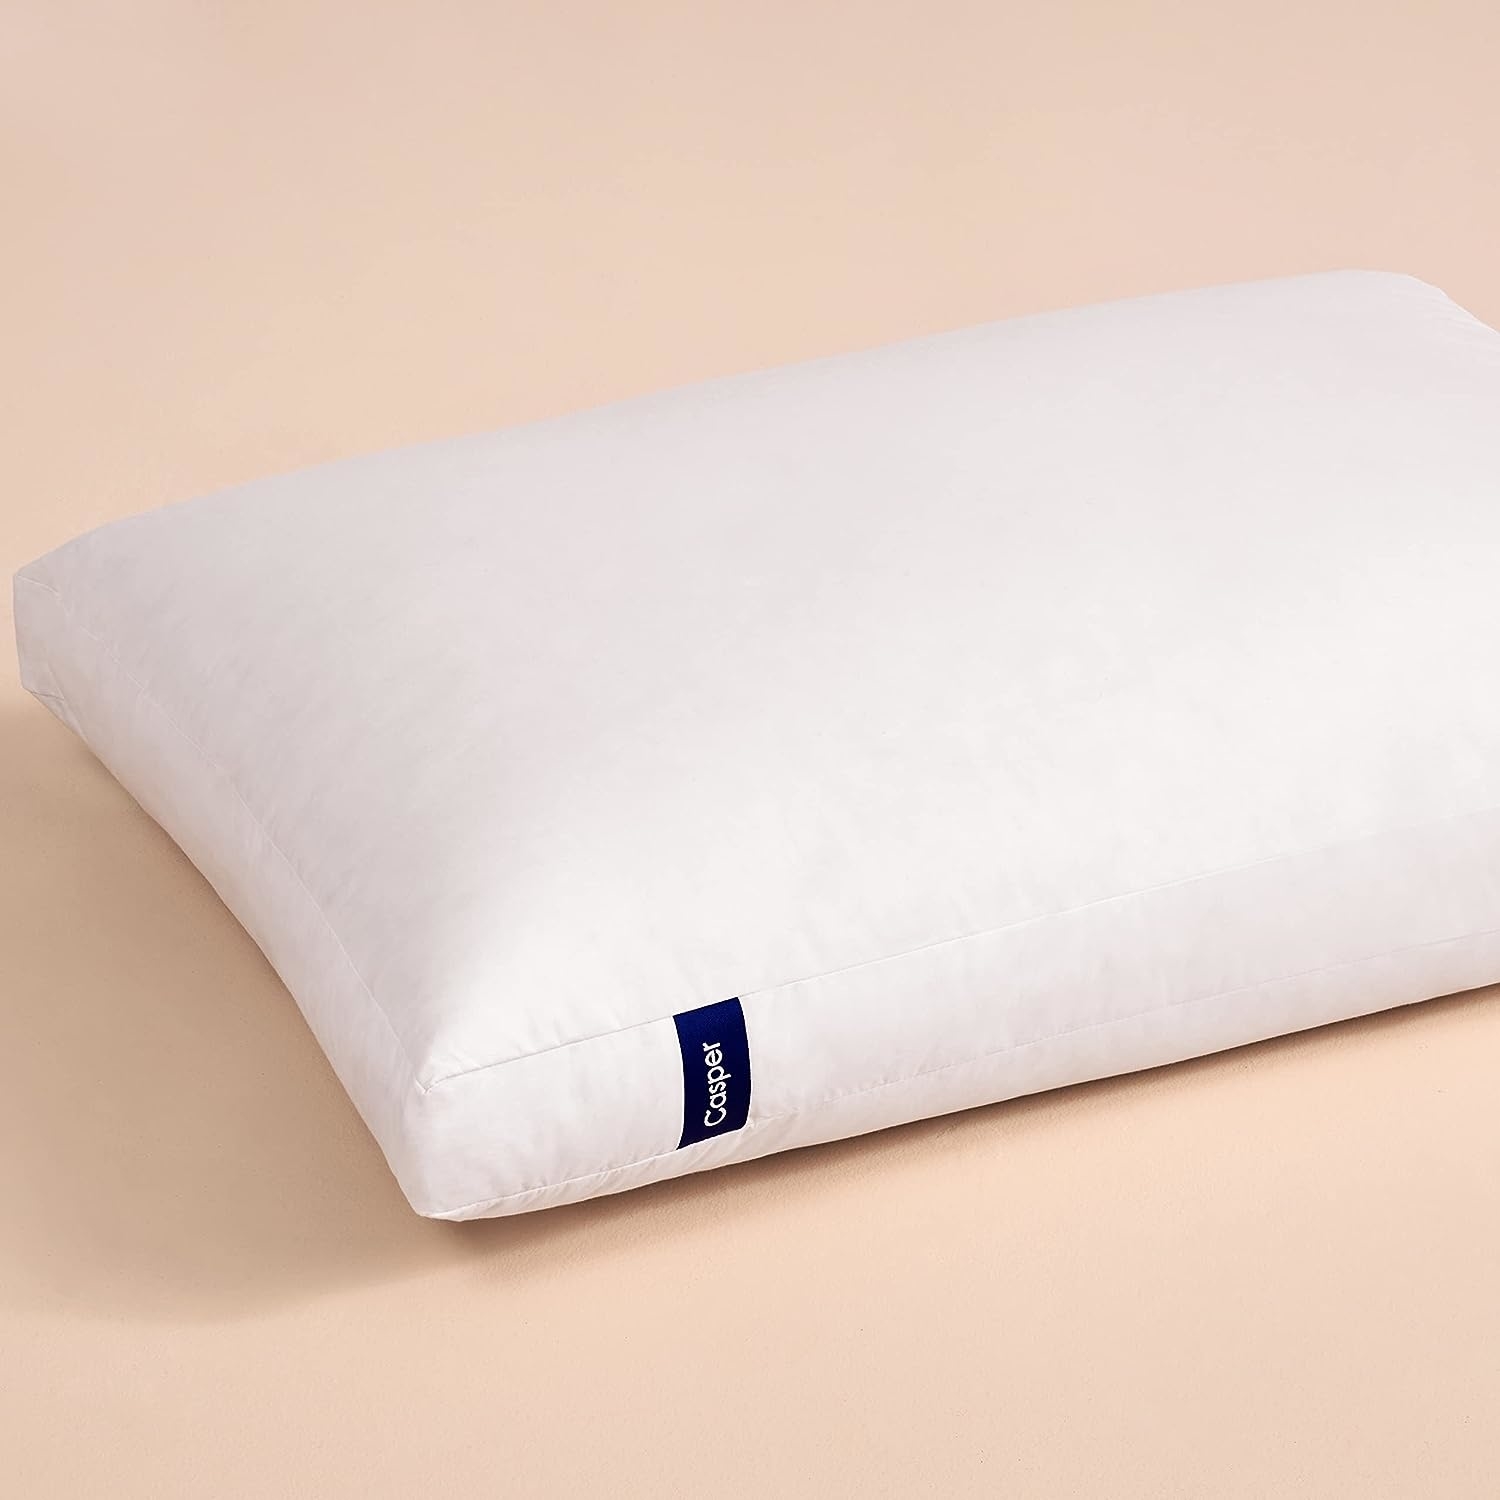 A white Casper pillow